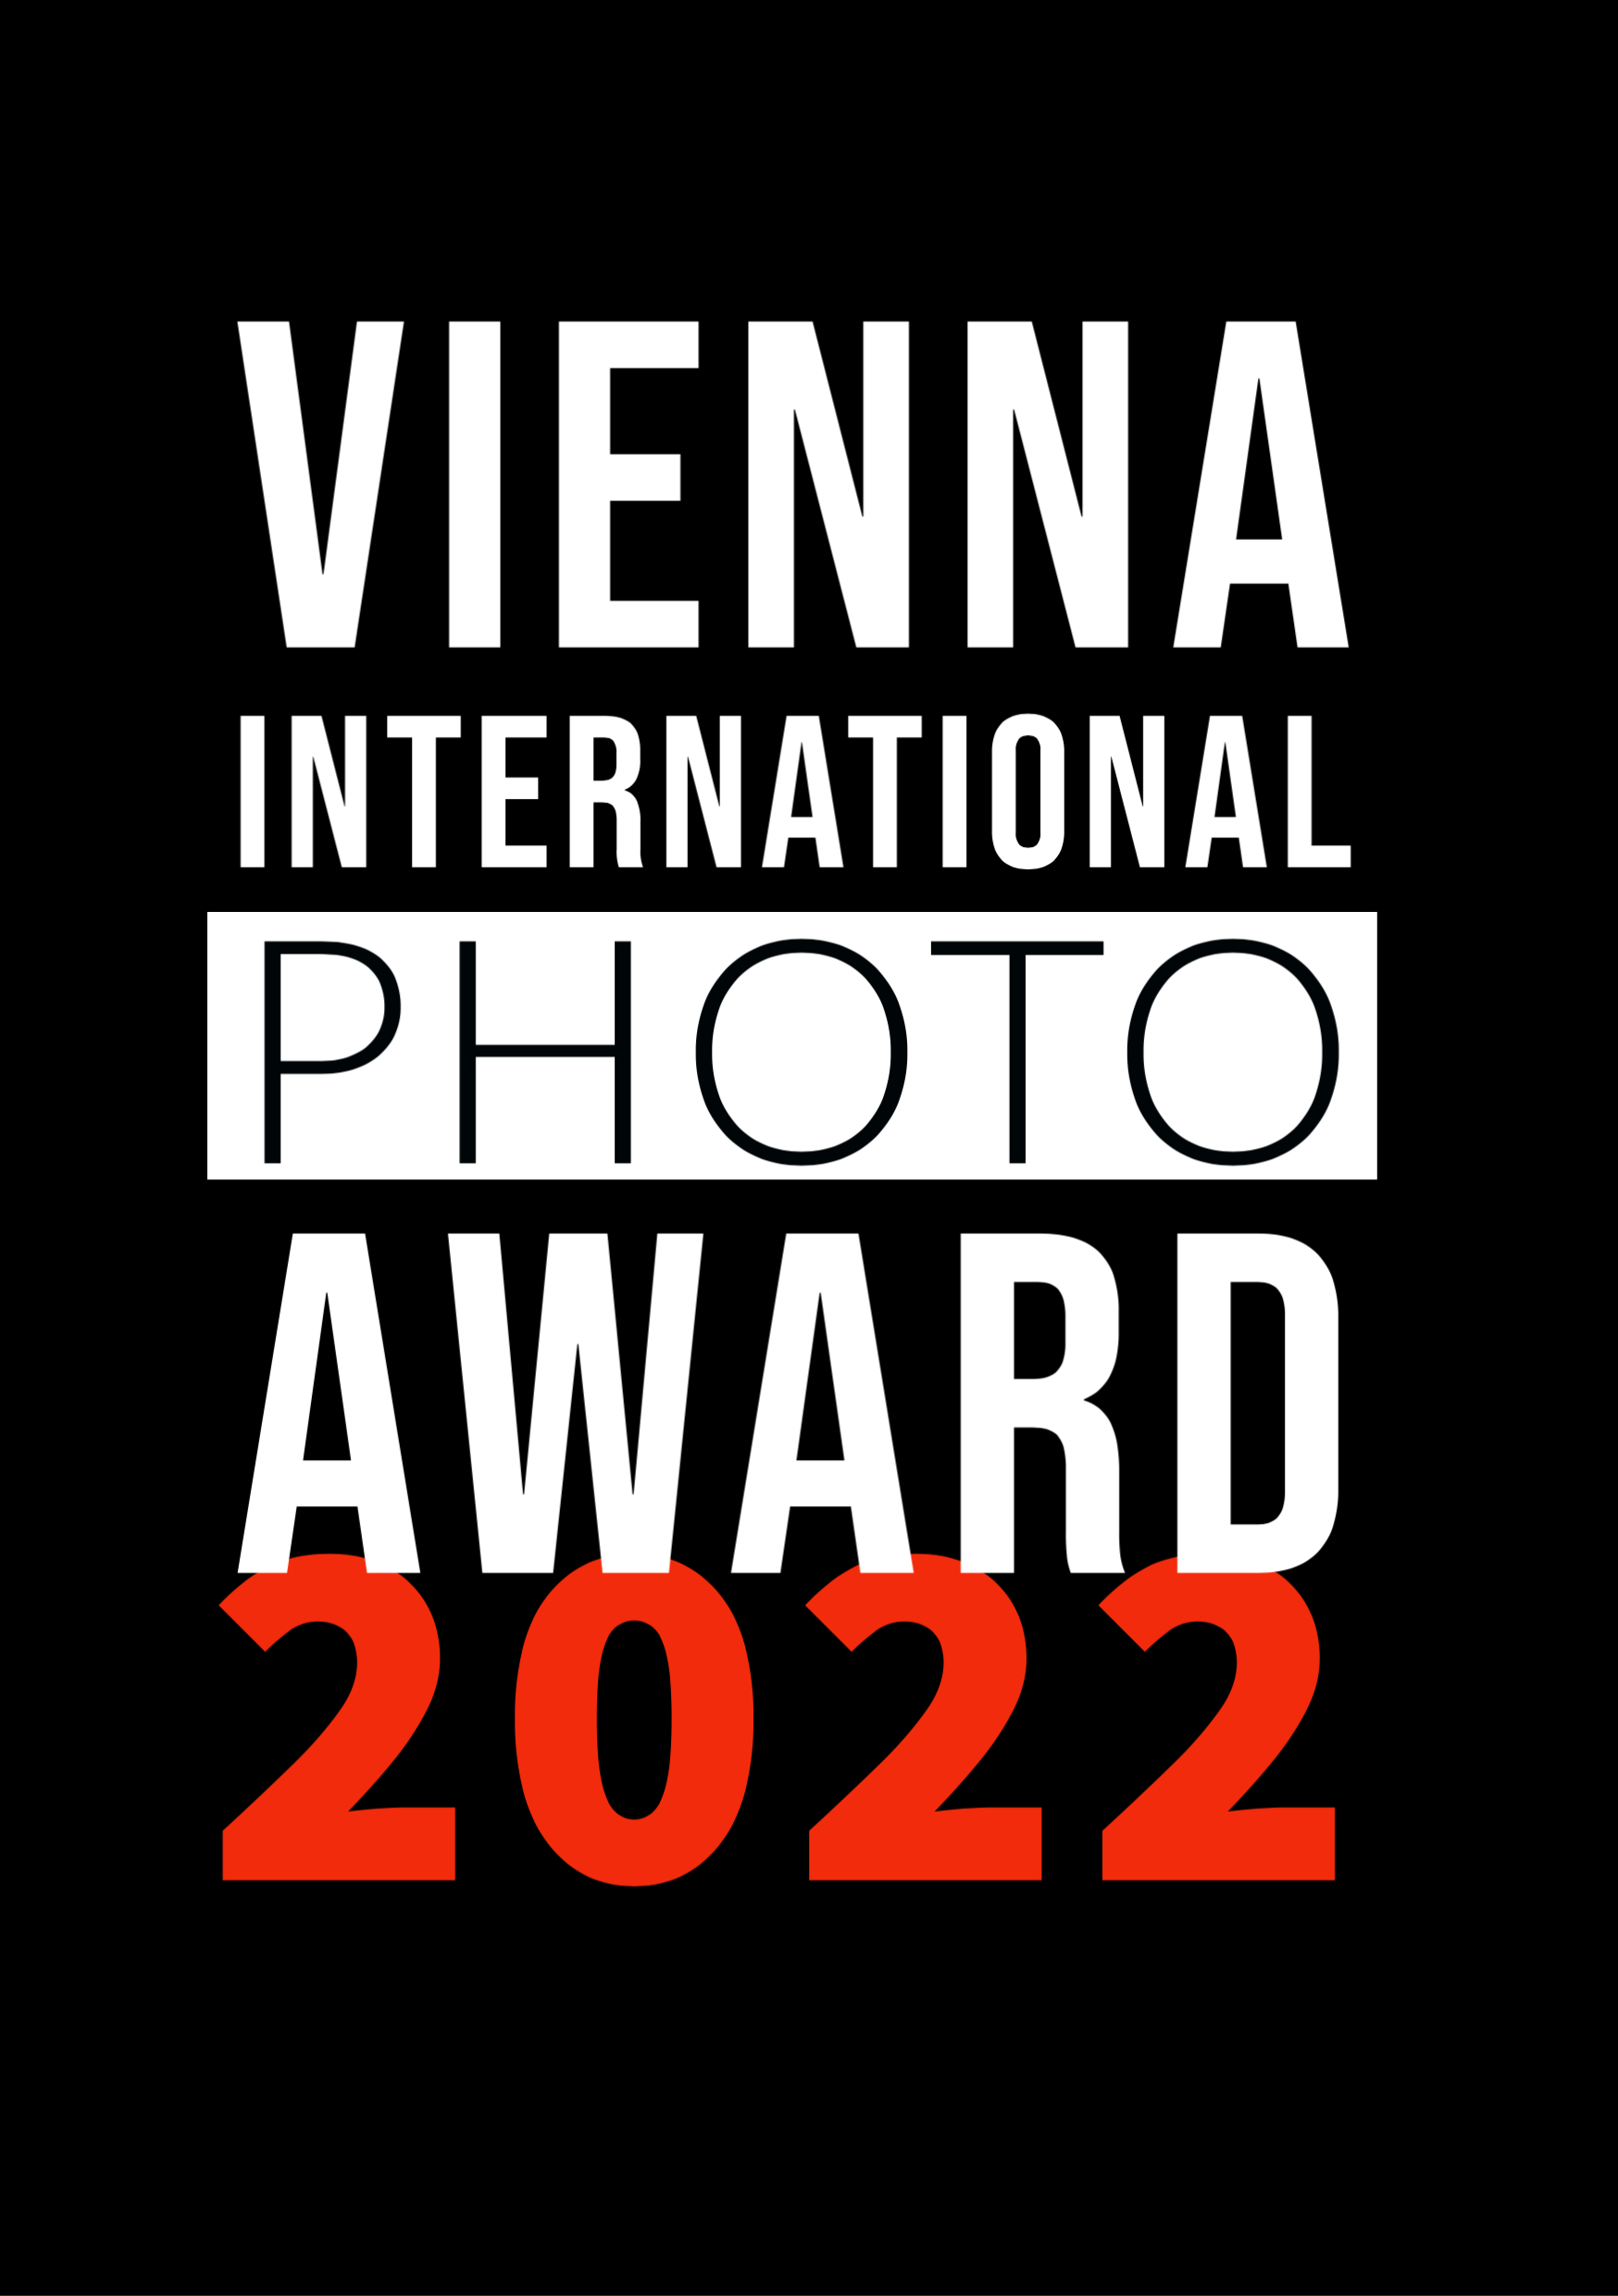 VIEPA 3. Vienna Internnational Photo Award 2022 - logo